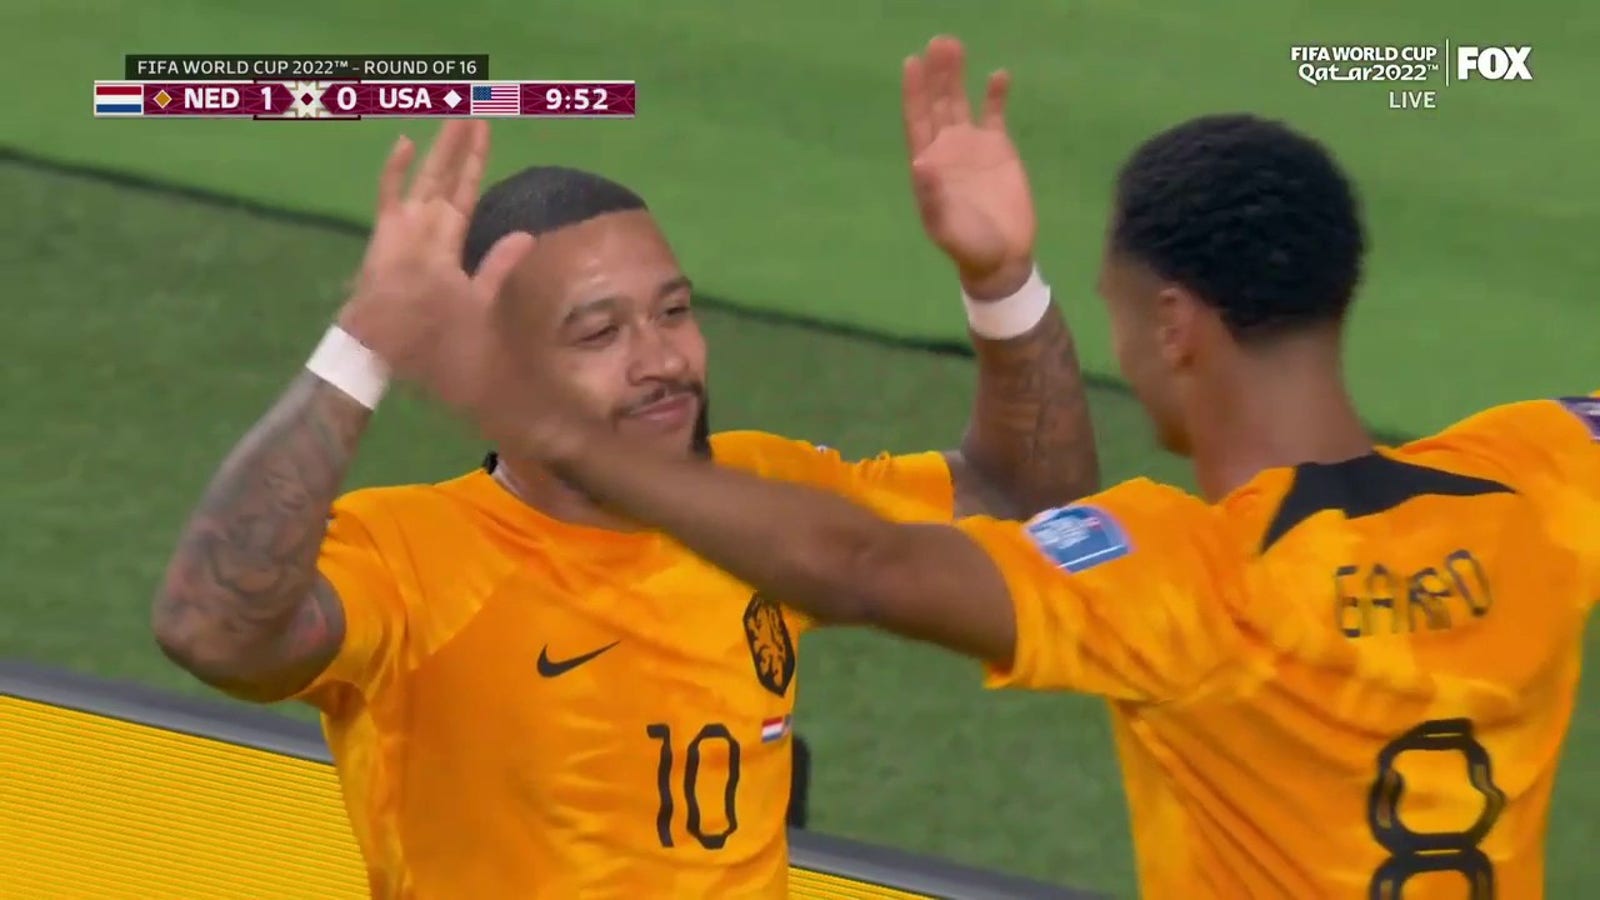 Netherlands's Memphis Depay scores goal vs. USA in 10'